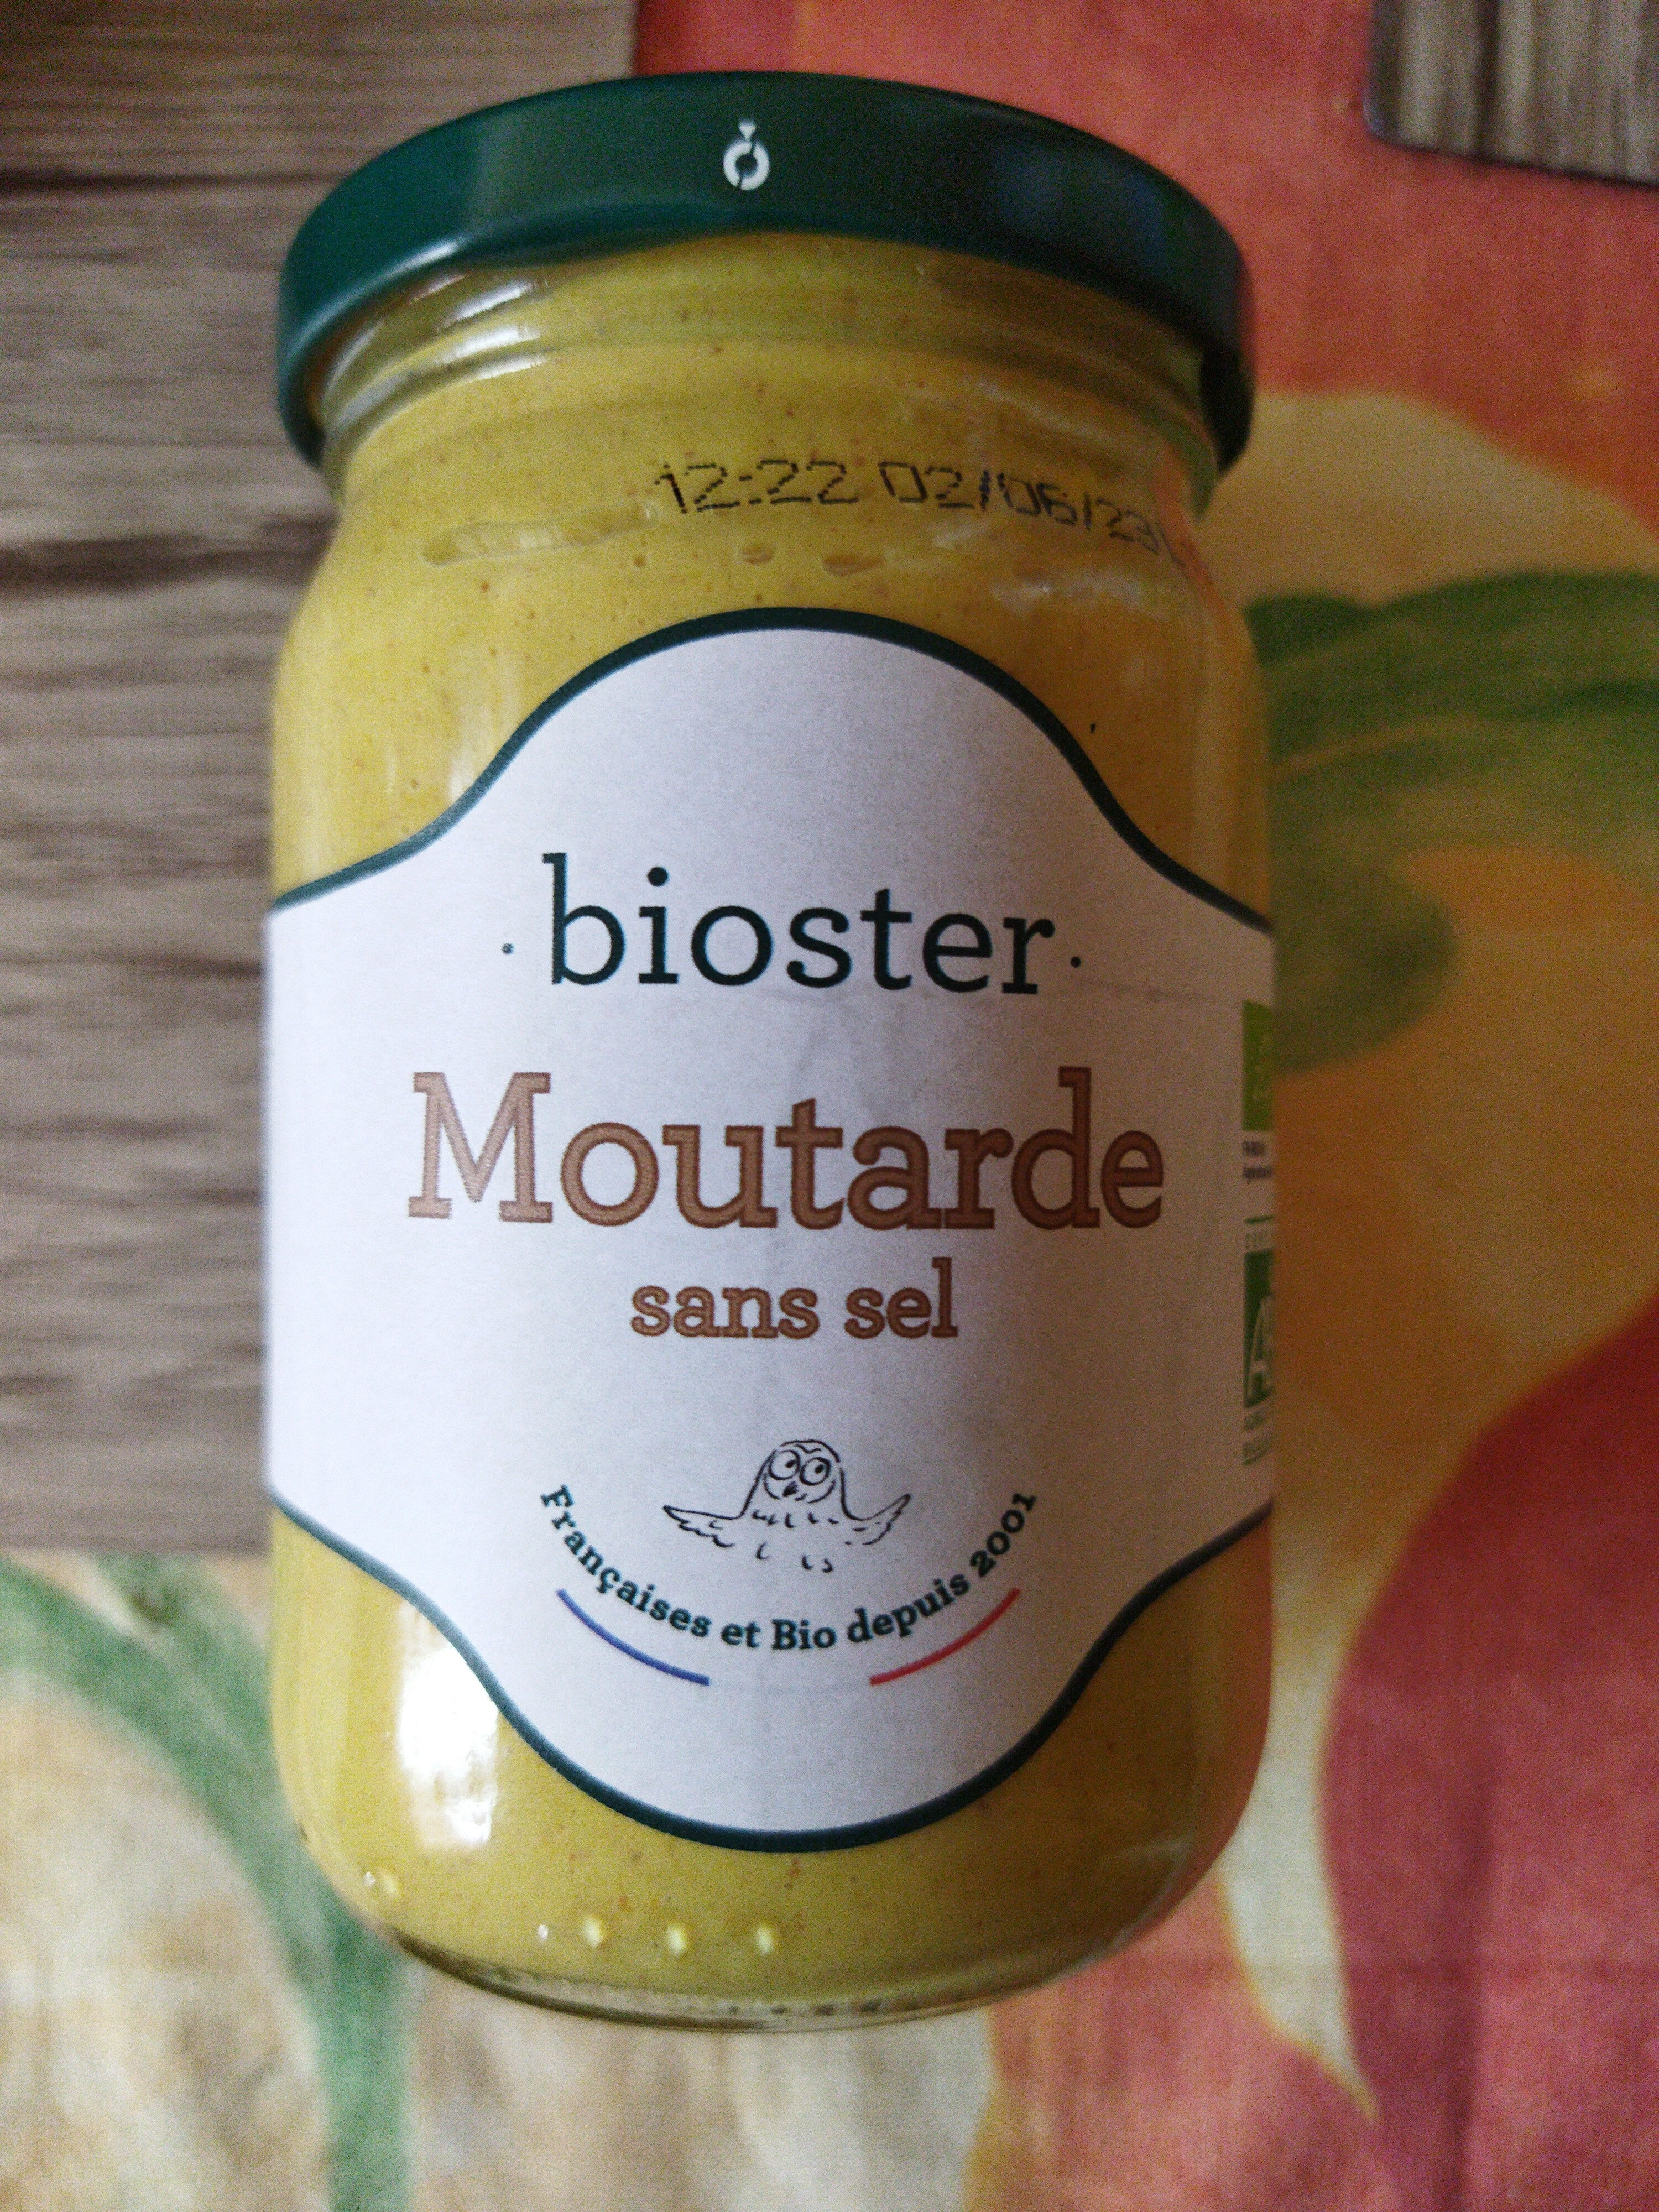 moutarde sans sel - Product - fr